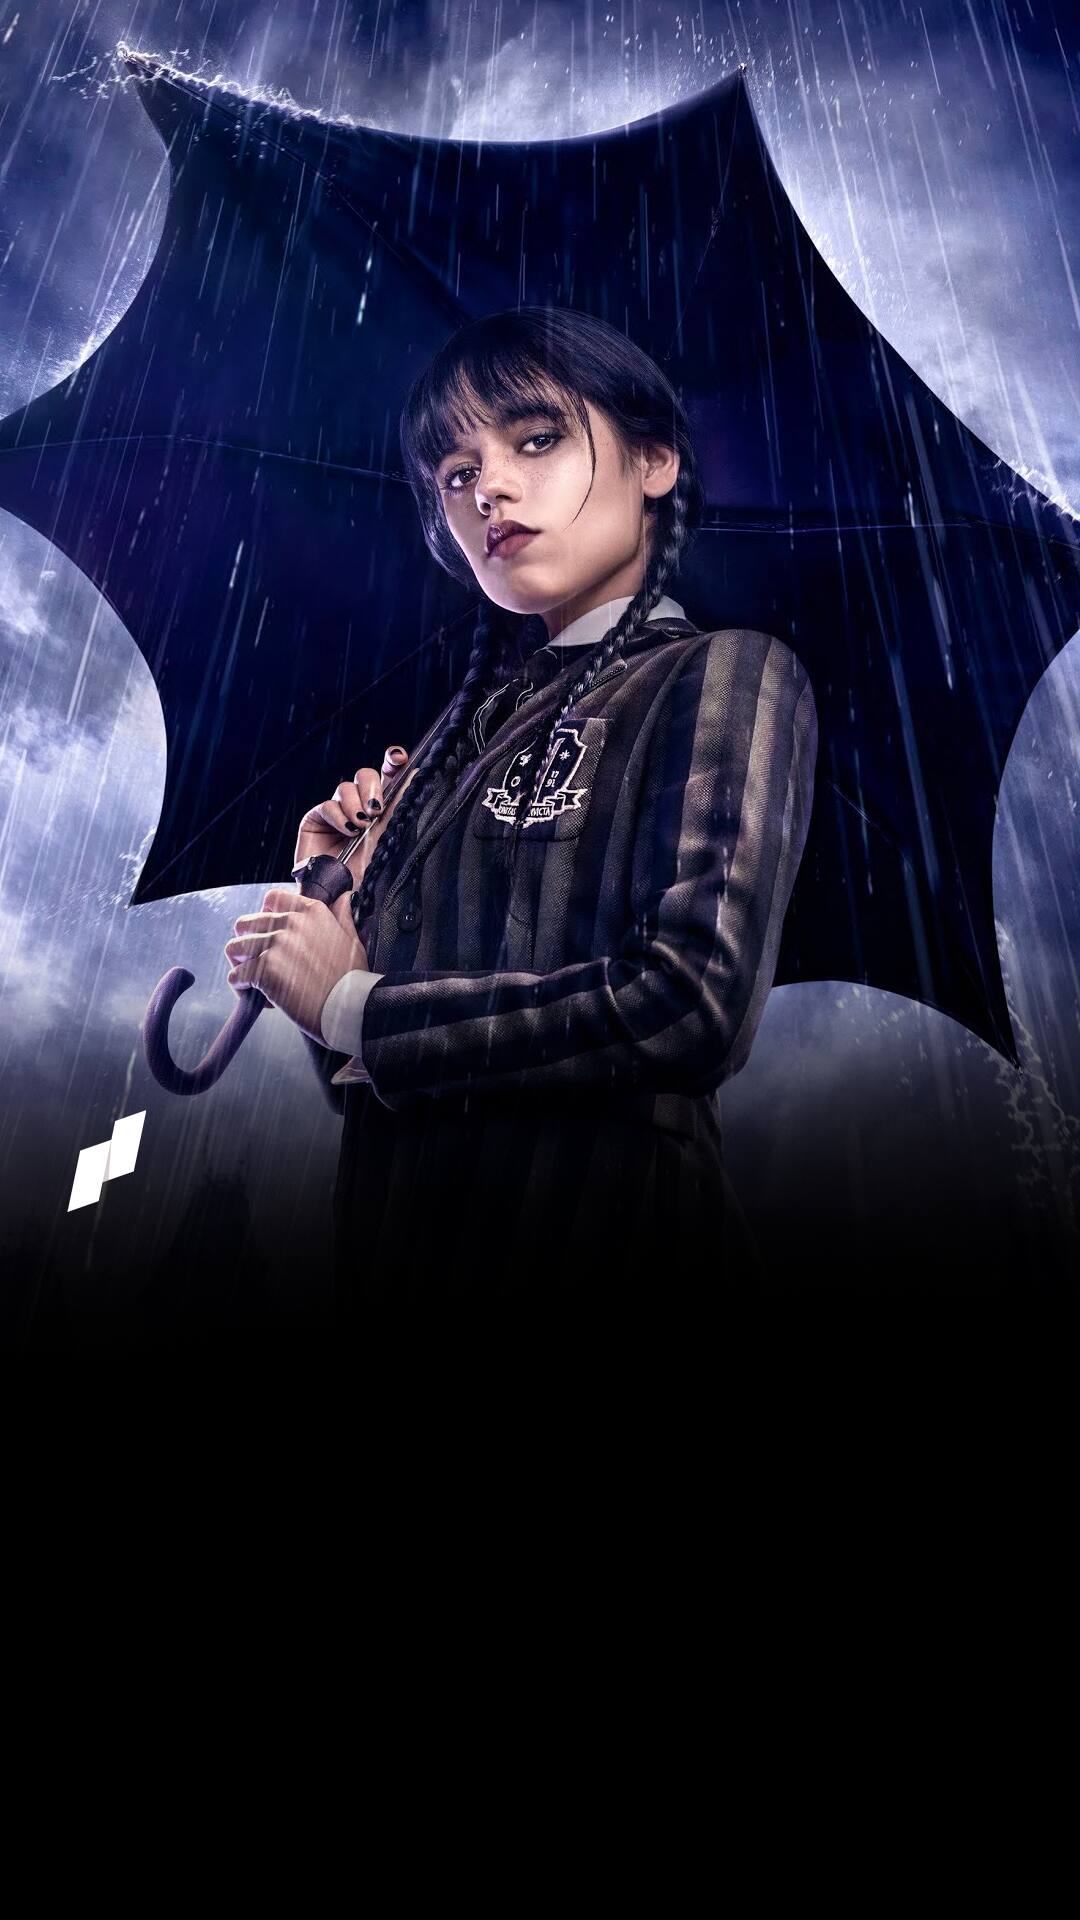 Watch this Wednesday Addams web series before Tim Burton's reboot